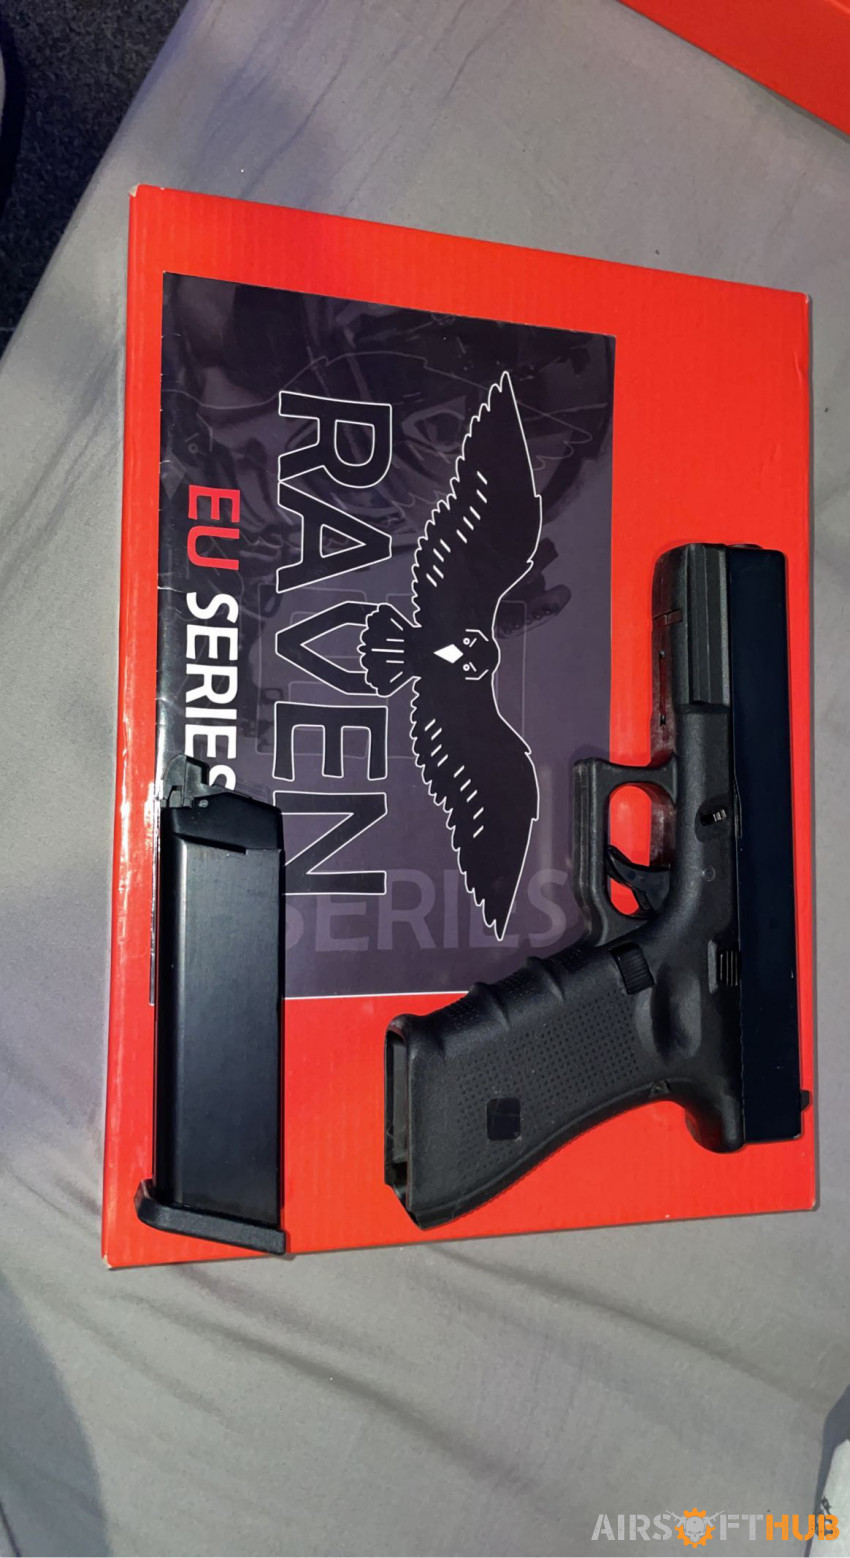 Raven EU Series Glock 17 - Used airsoft equipment